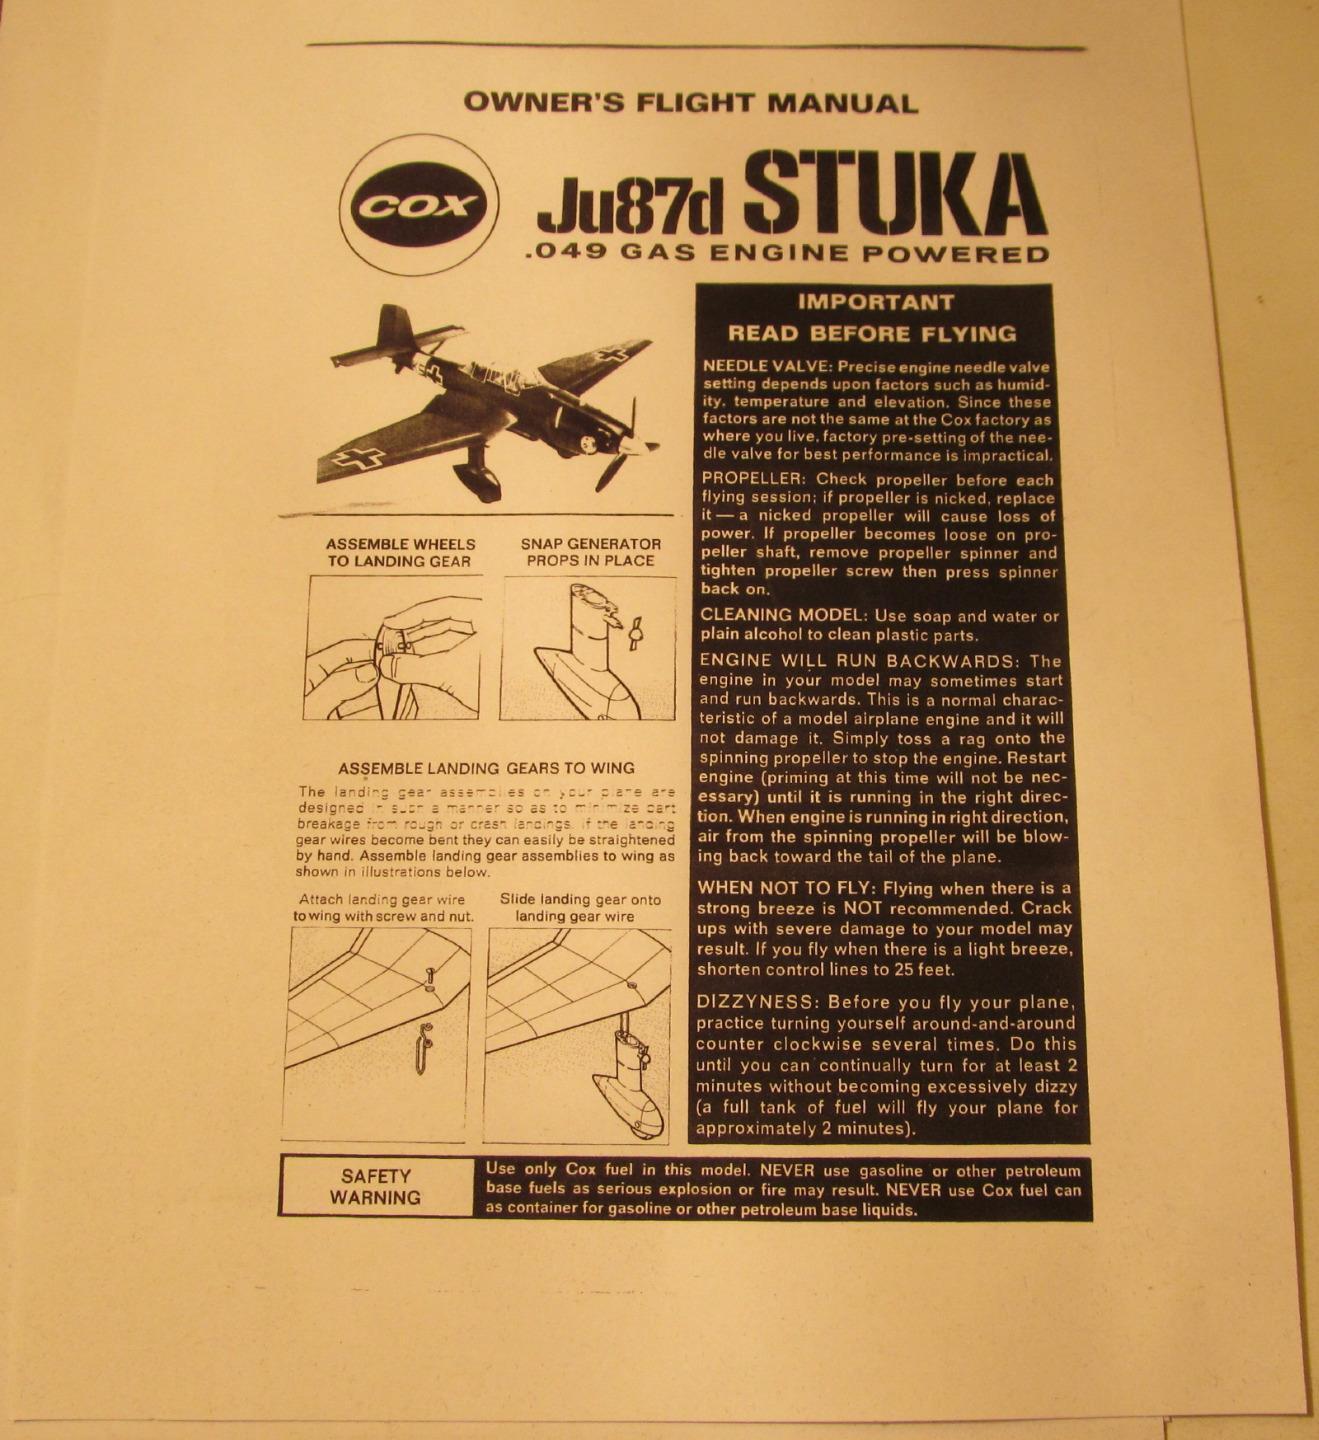 Cox Ju87d Stuka Owner's Flight Manual #6441 Photocopy for .049 Gas Powered Plane